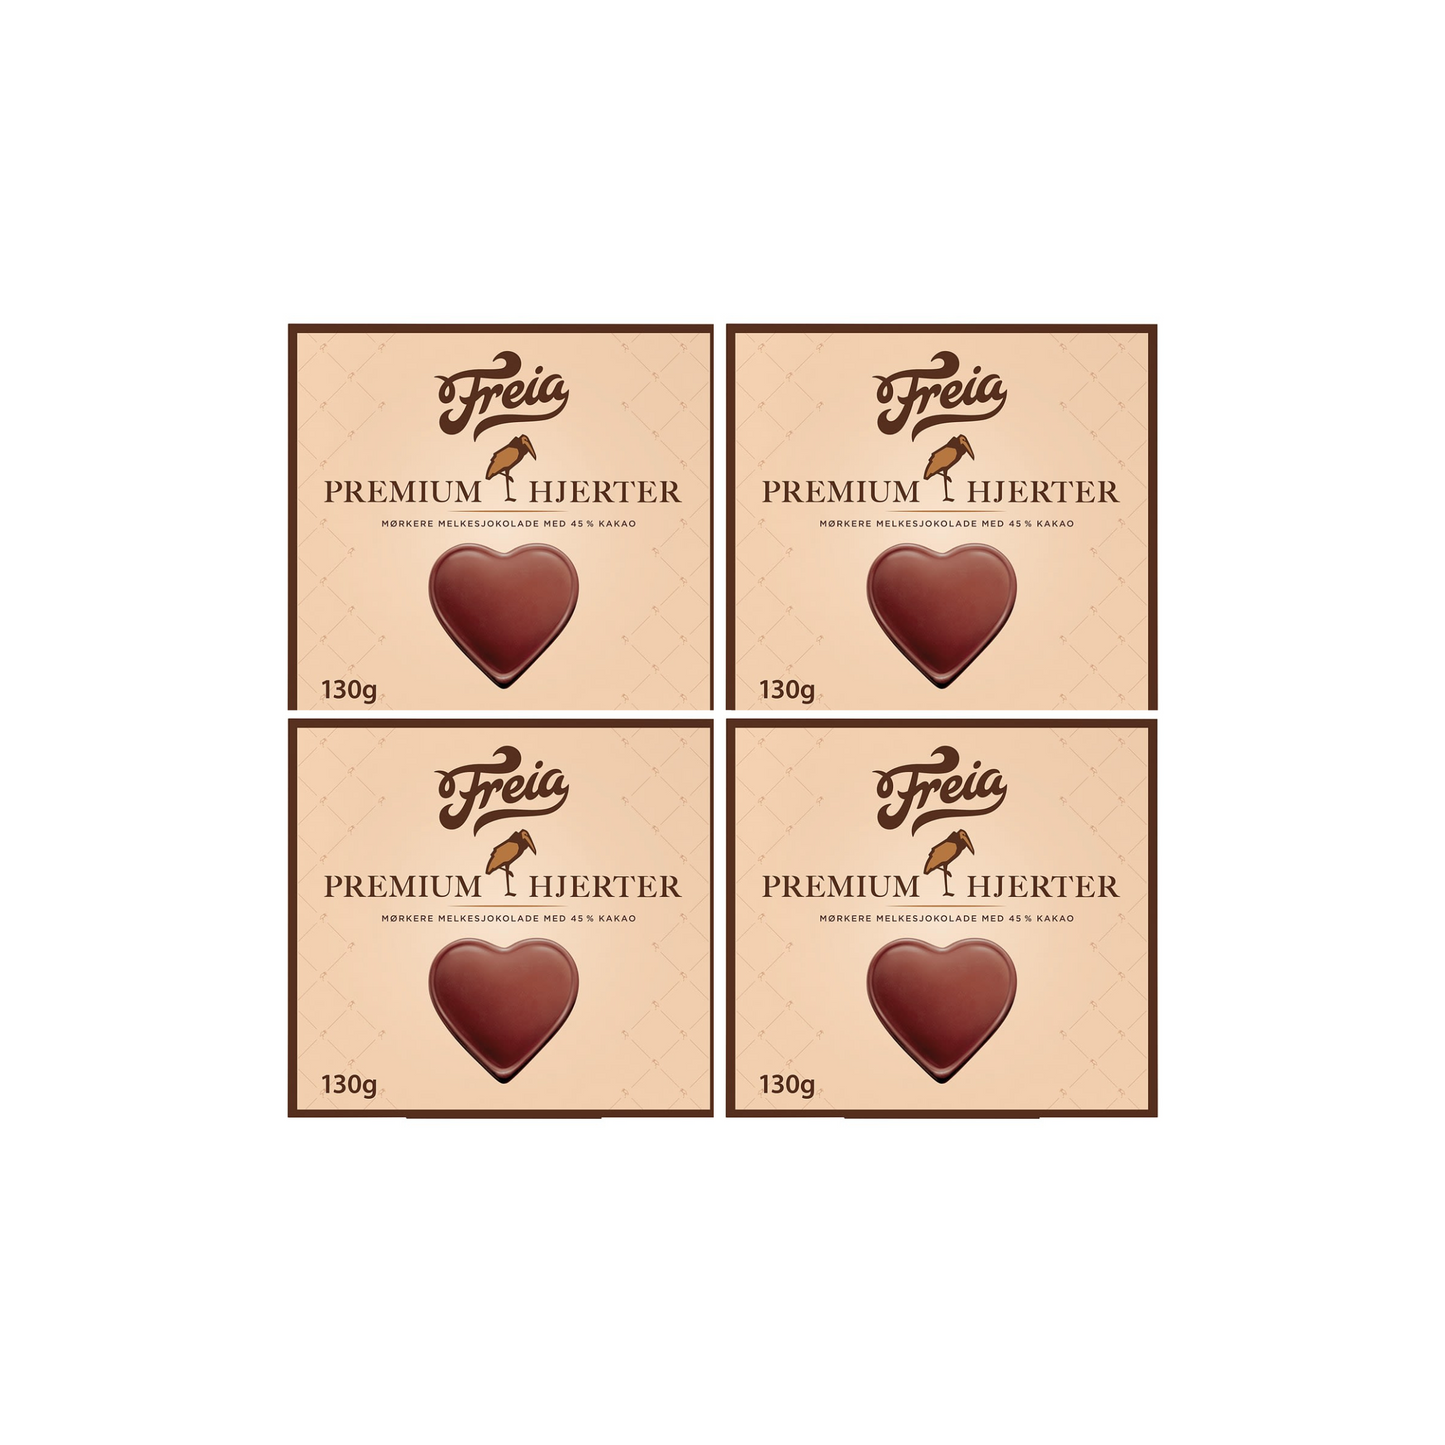 Freia Premium Hjerter (4 Pack) - Norway Mørkere Dark Chocolate Heart Shaped Chocolates 130 Grams (4.6 oz) (4 Pack)